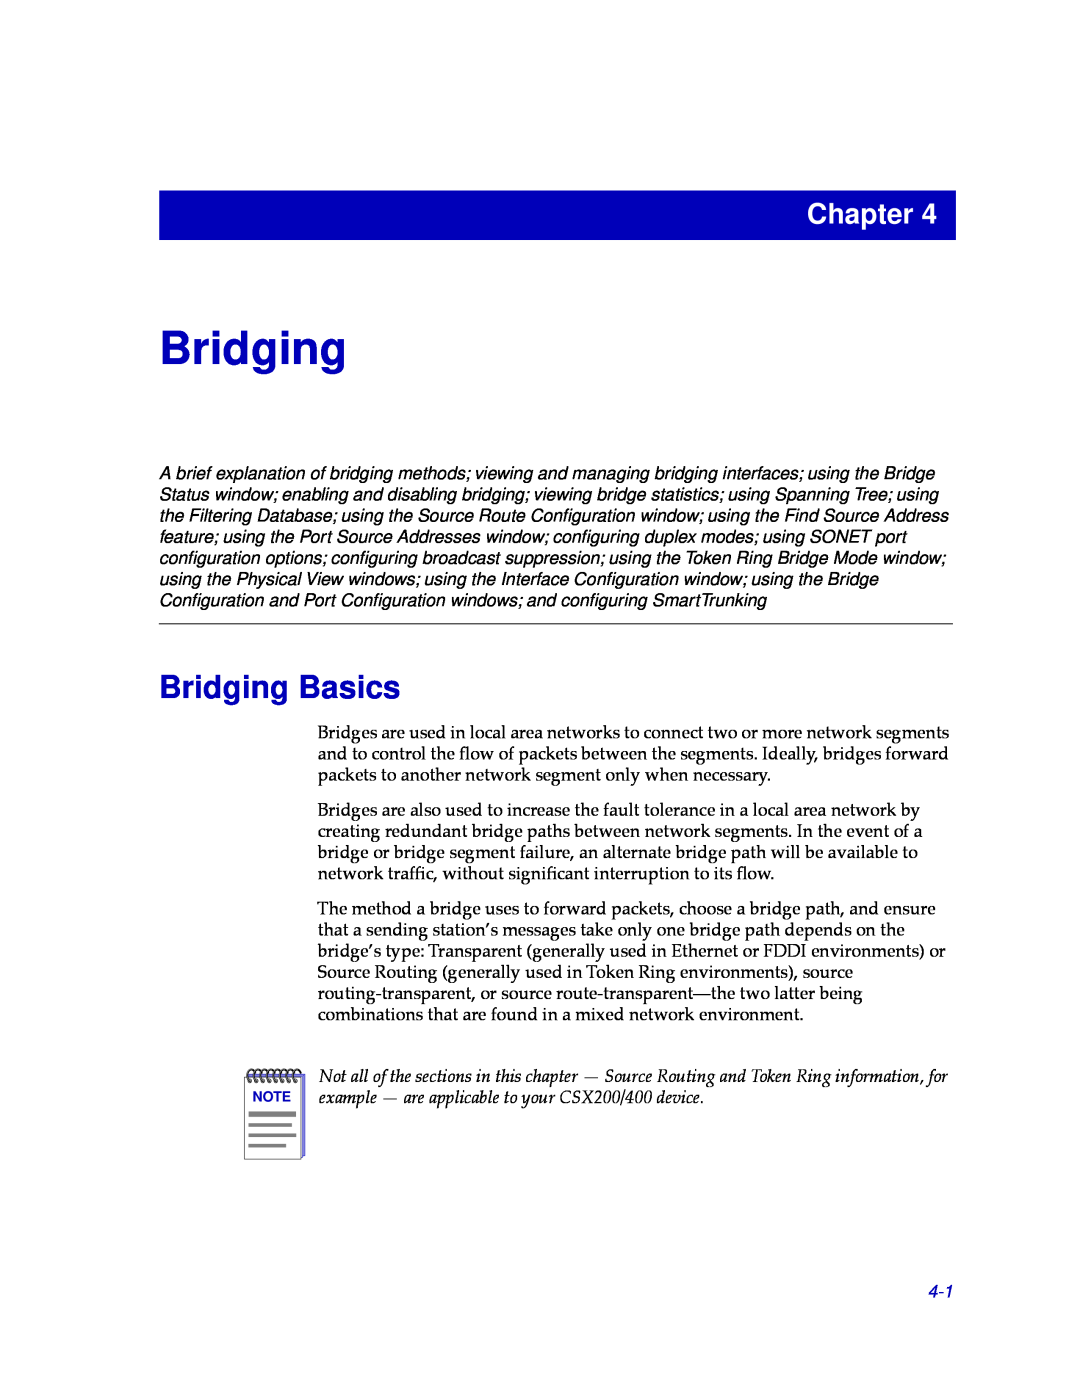 Cabletron Systems CSX200, CSX400 manual Bridging Basics, Chapter 